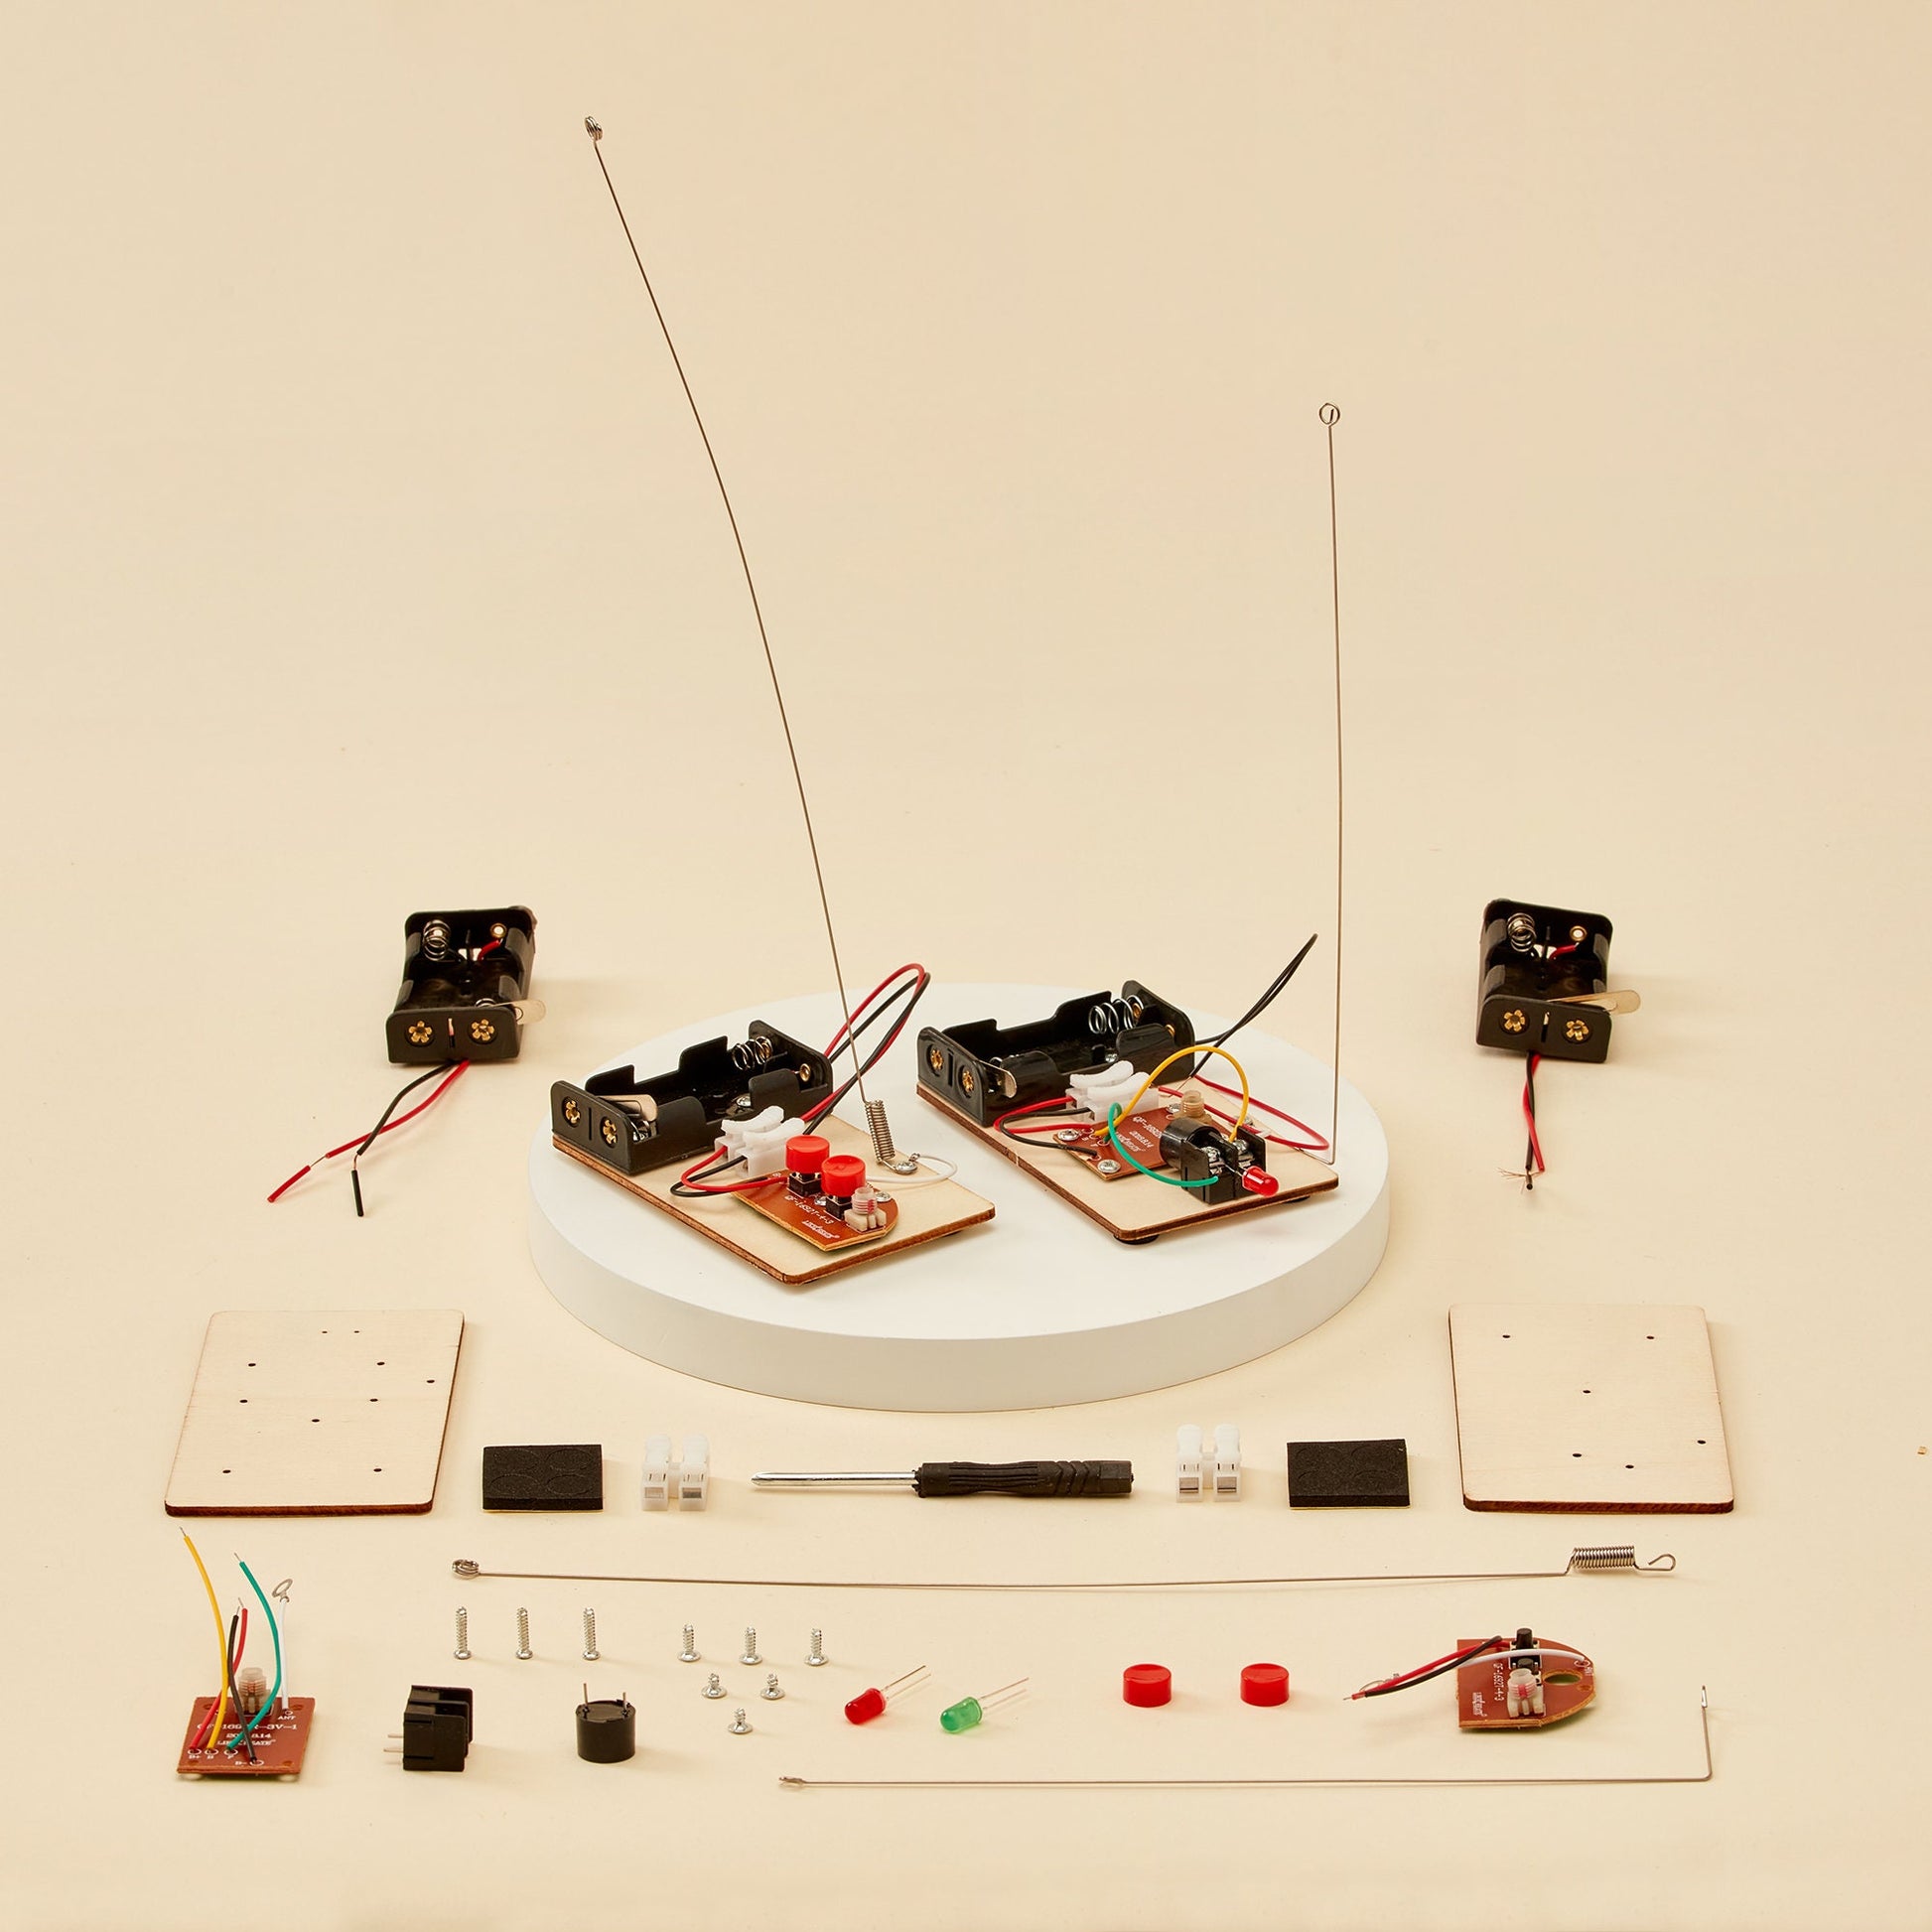 DIY Kit Build a Telegraph Machine, Morse Code